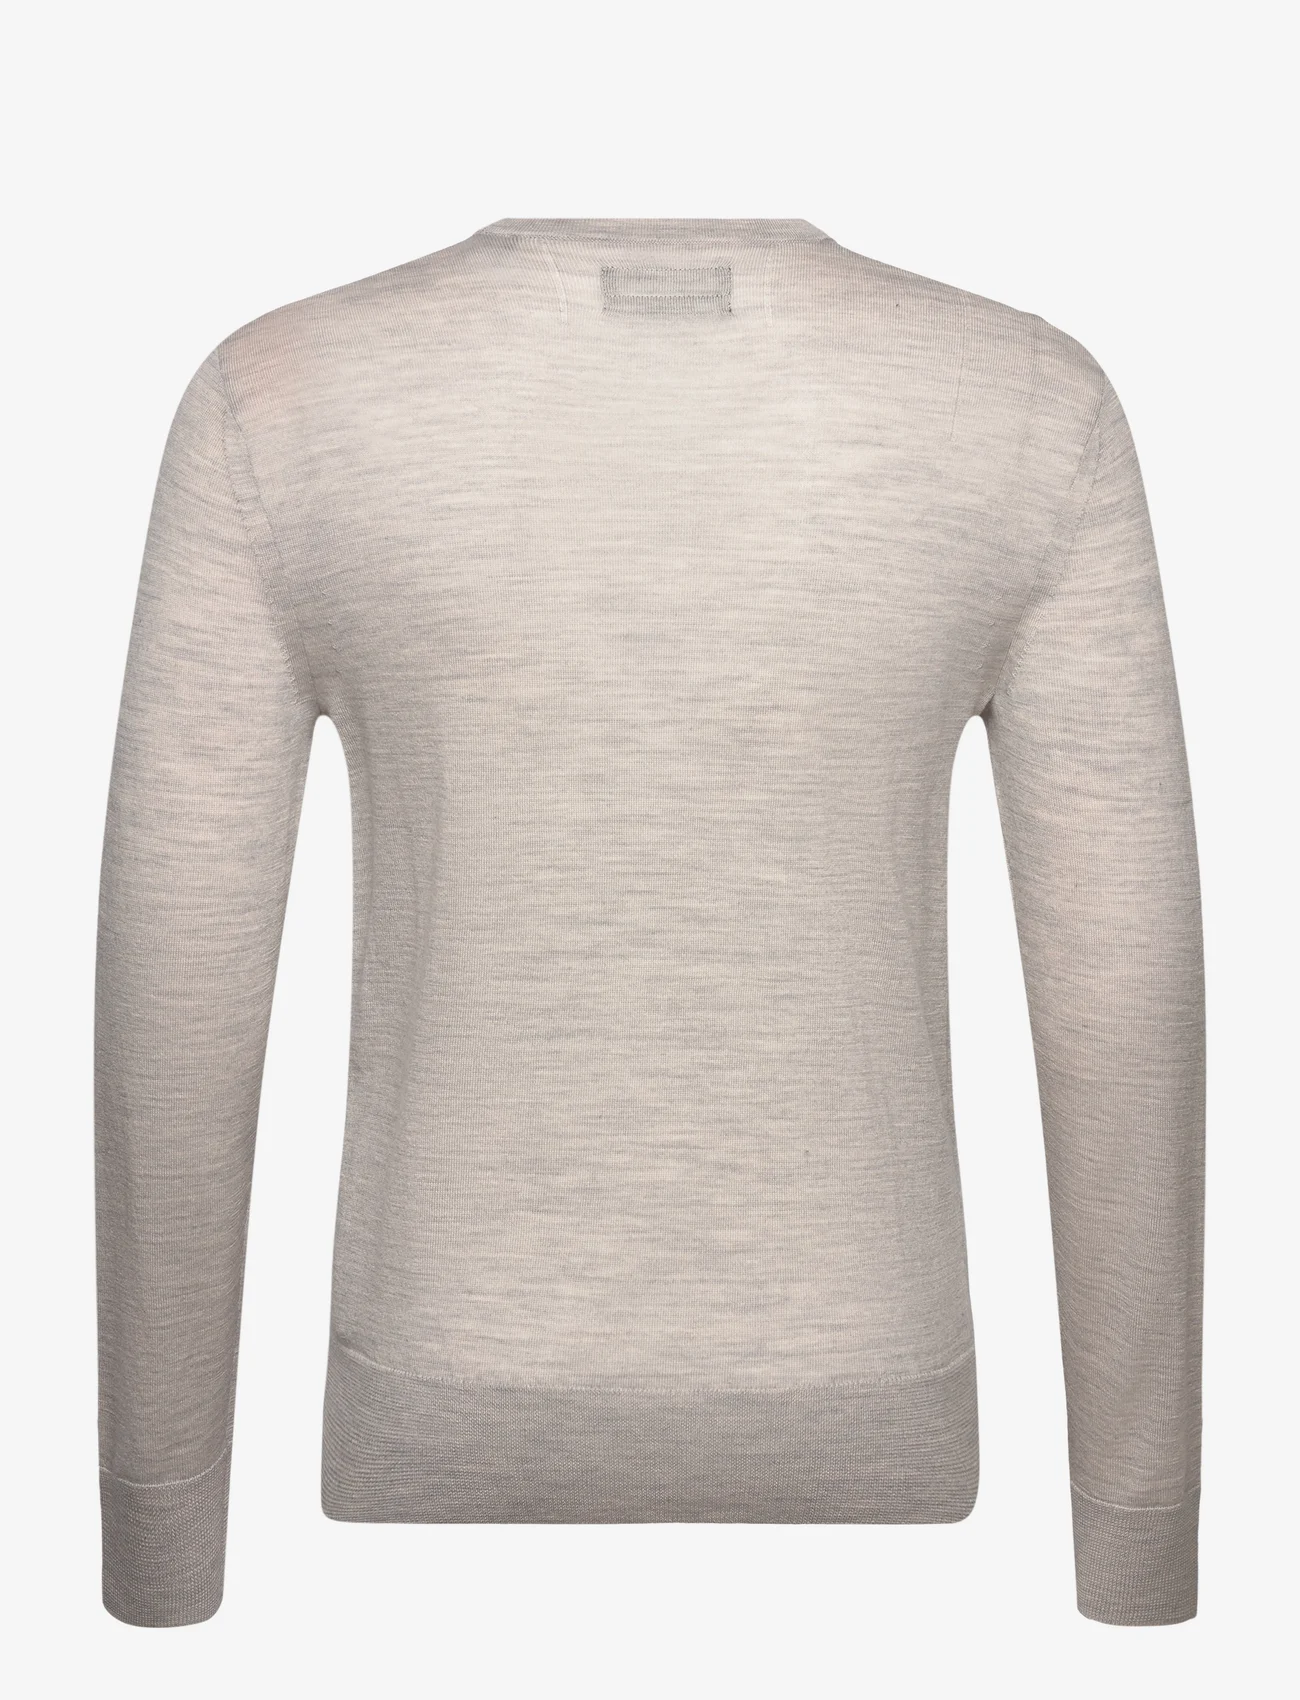 AllSaints - MODE MERINO CREW - basic knitwear - cool grey - 1